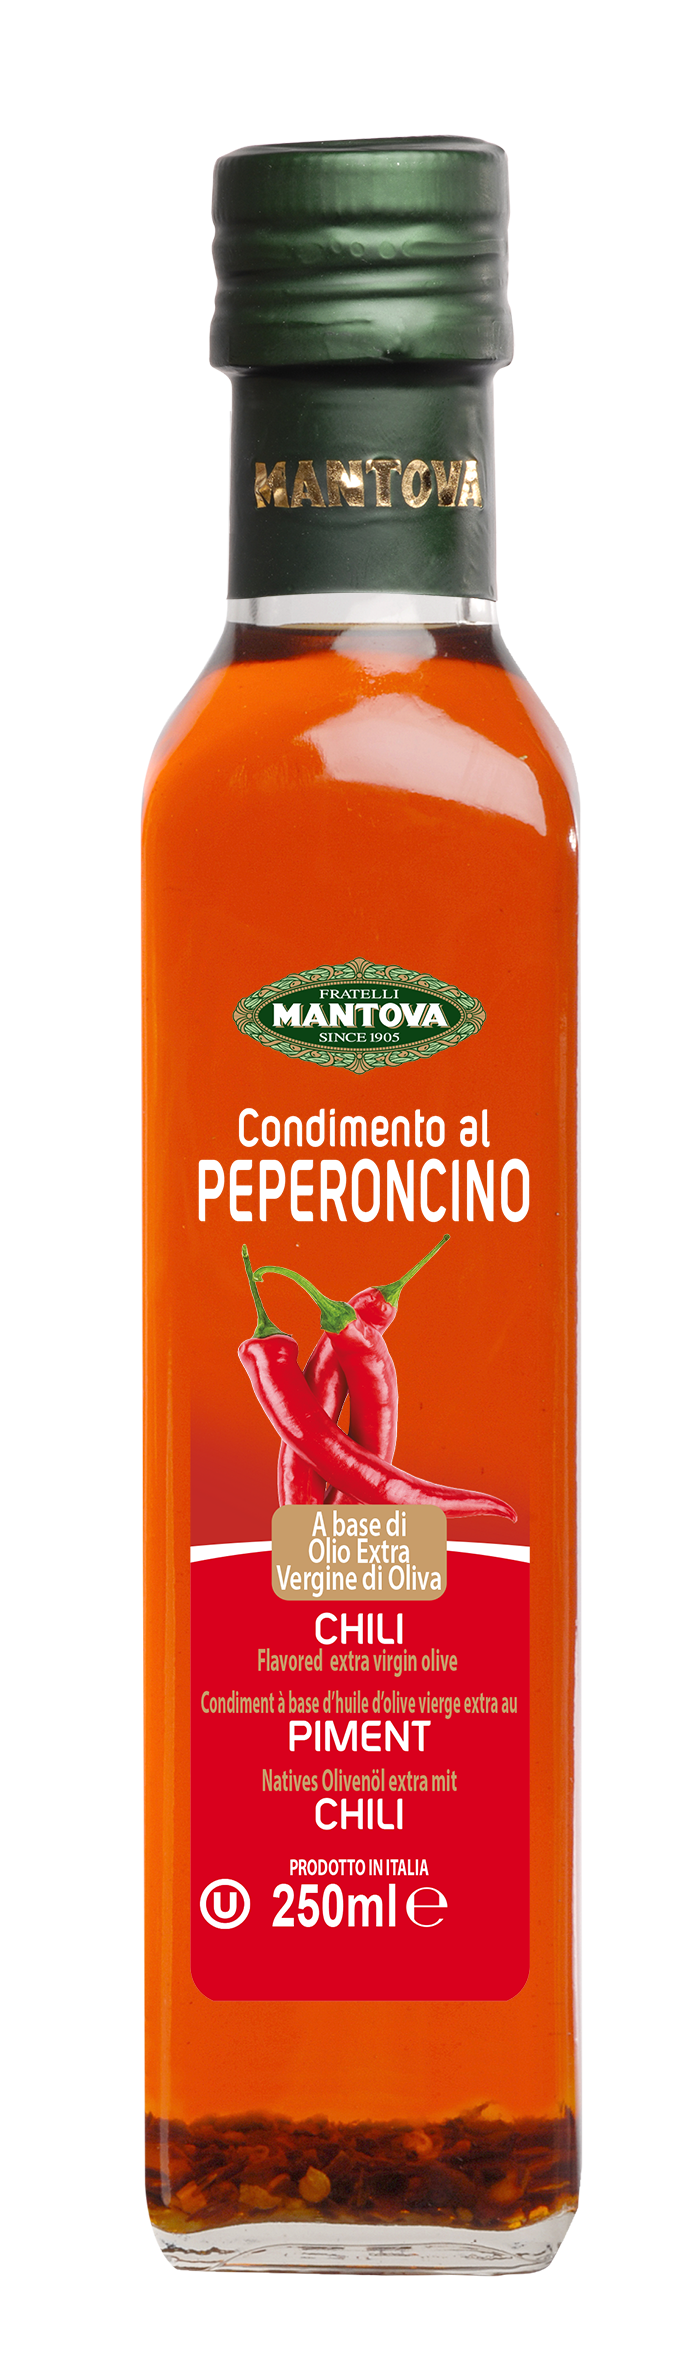 Chili Flavored Extra Virgin Olive Oil Mantova 250ml